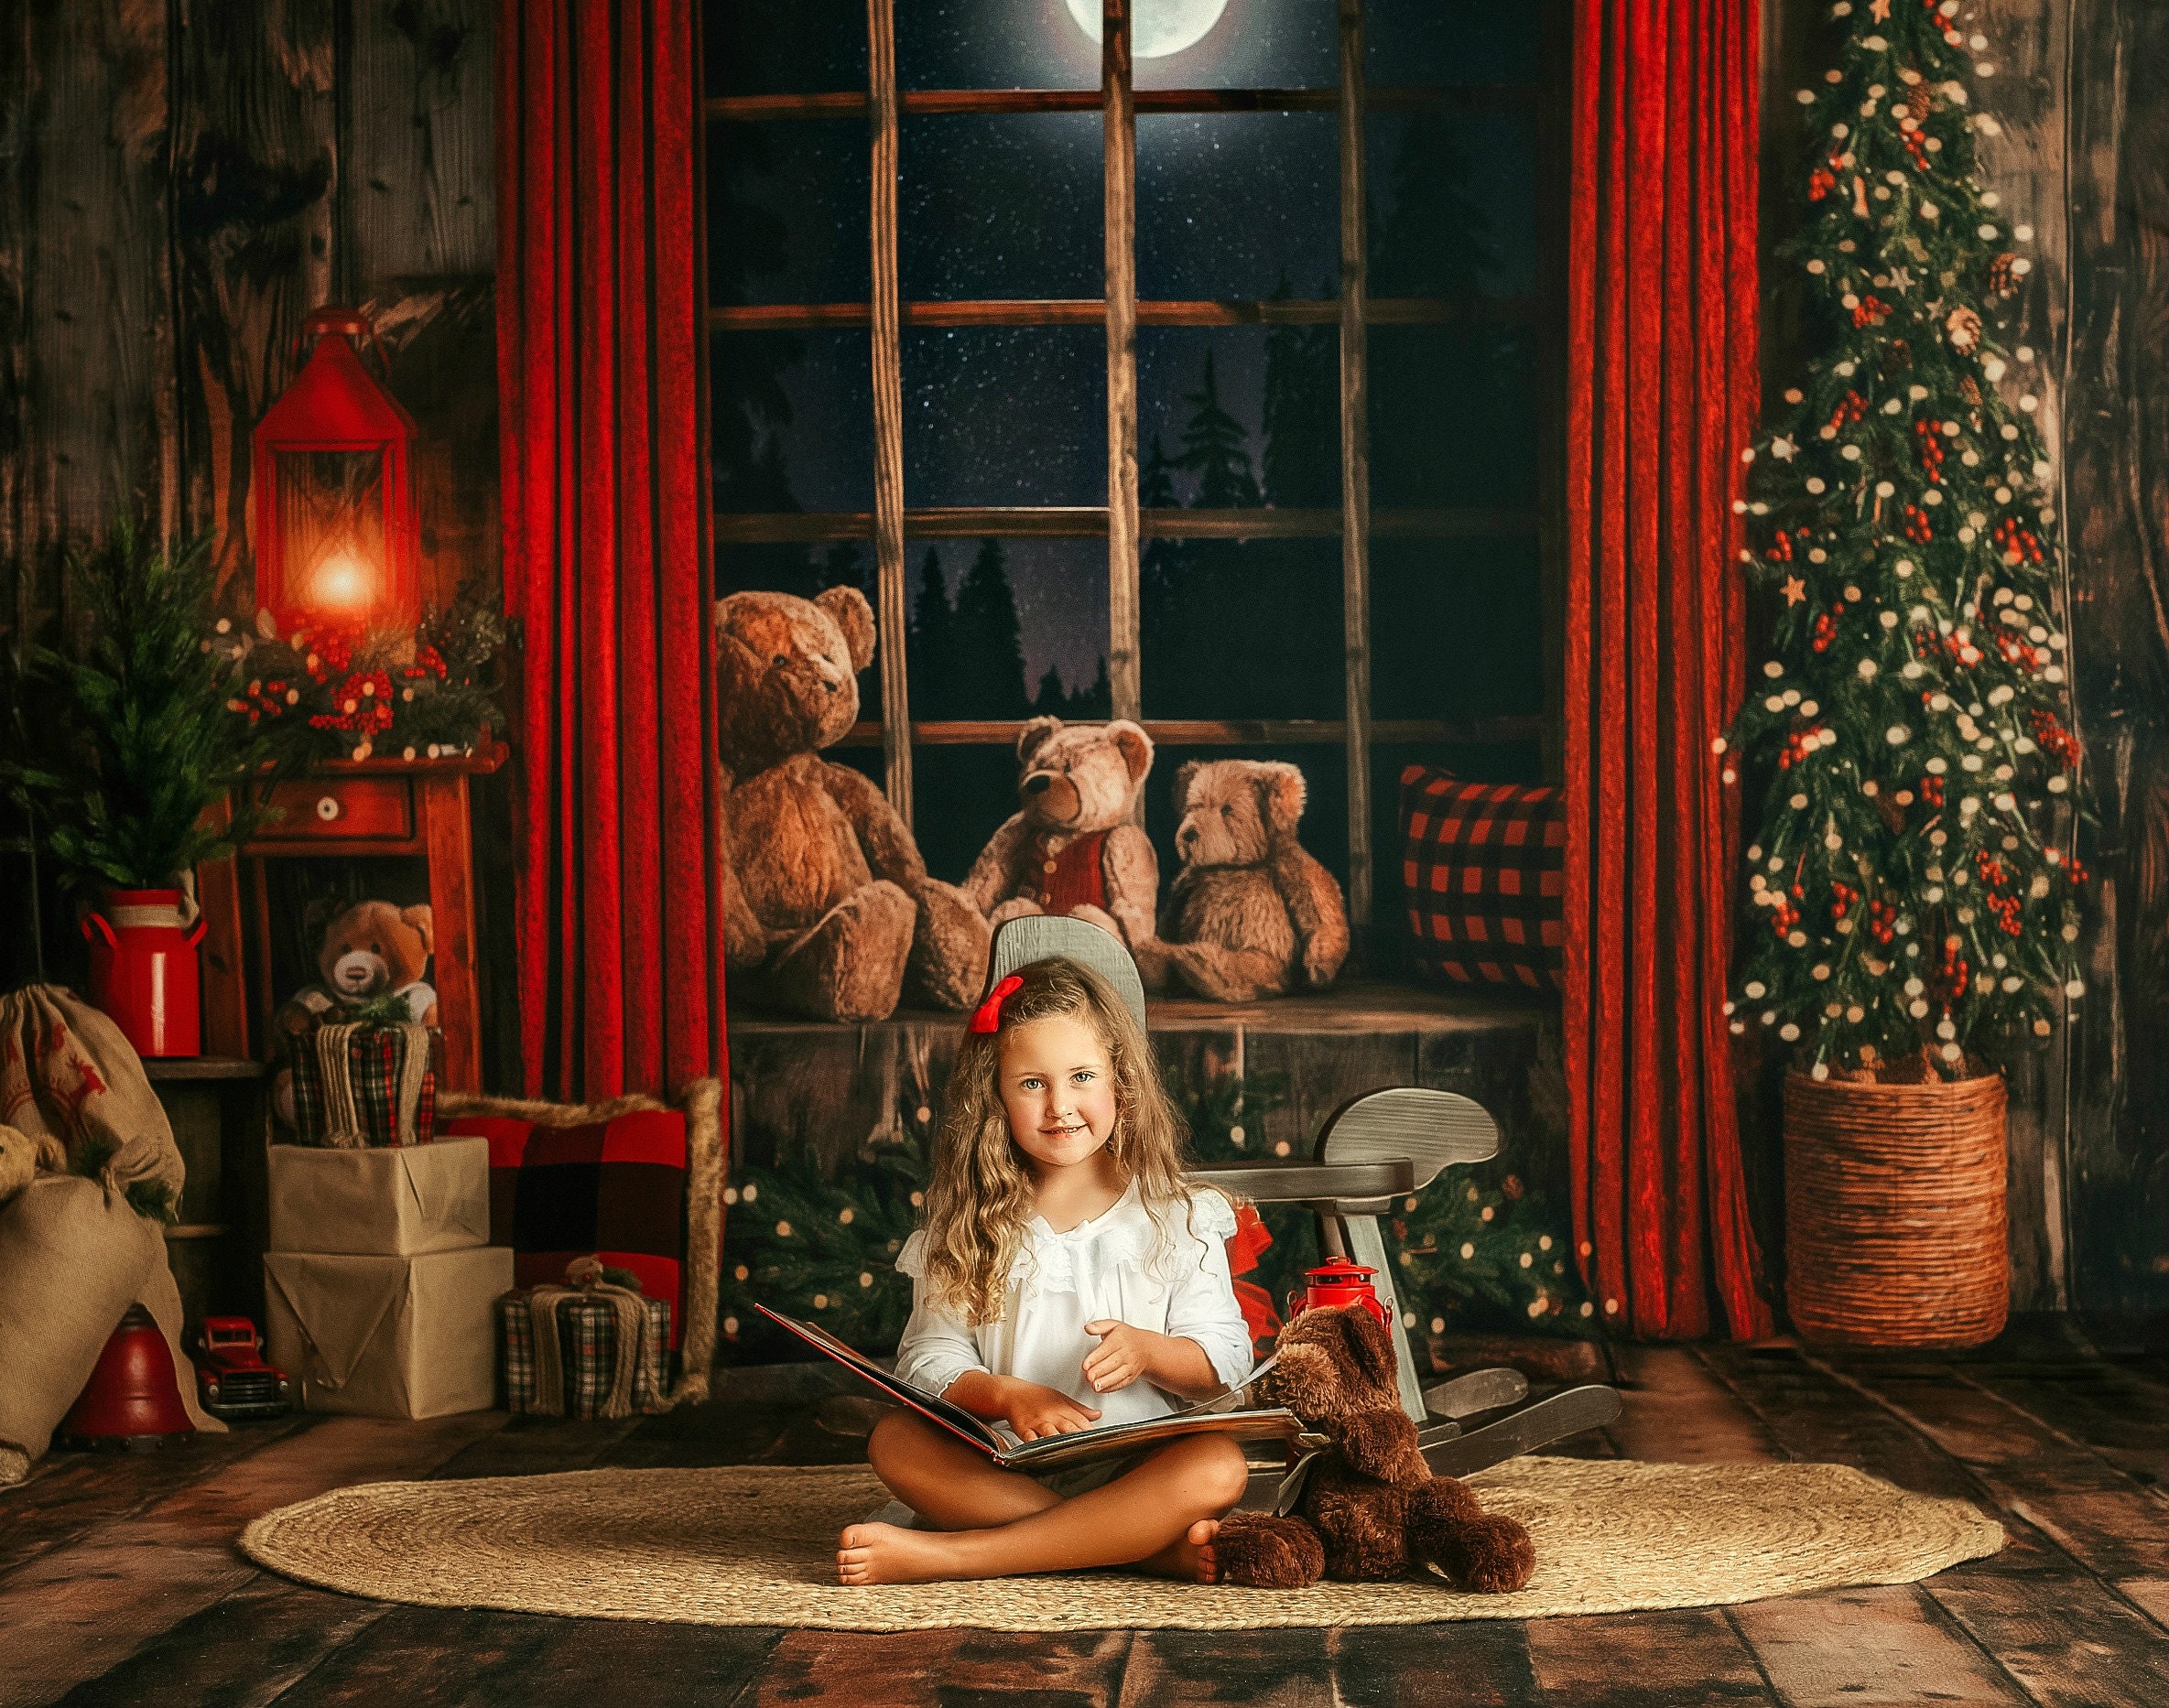 Merry Beary Christmas Photography Backdrop Christmas | Etsy